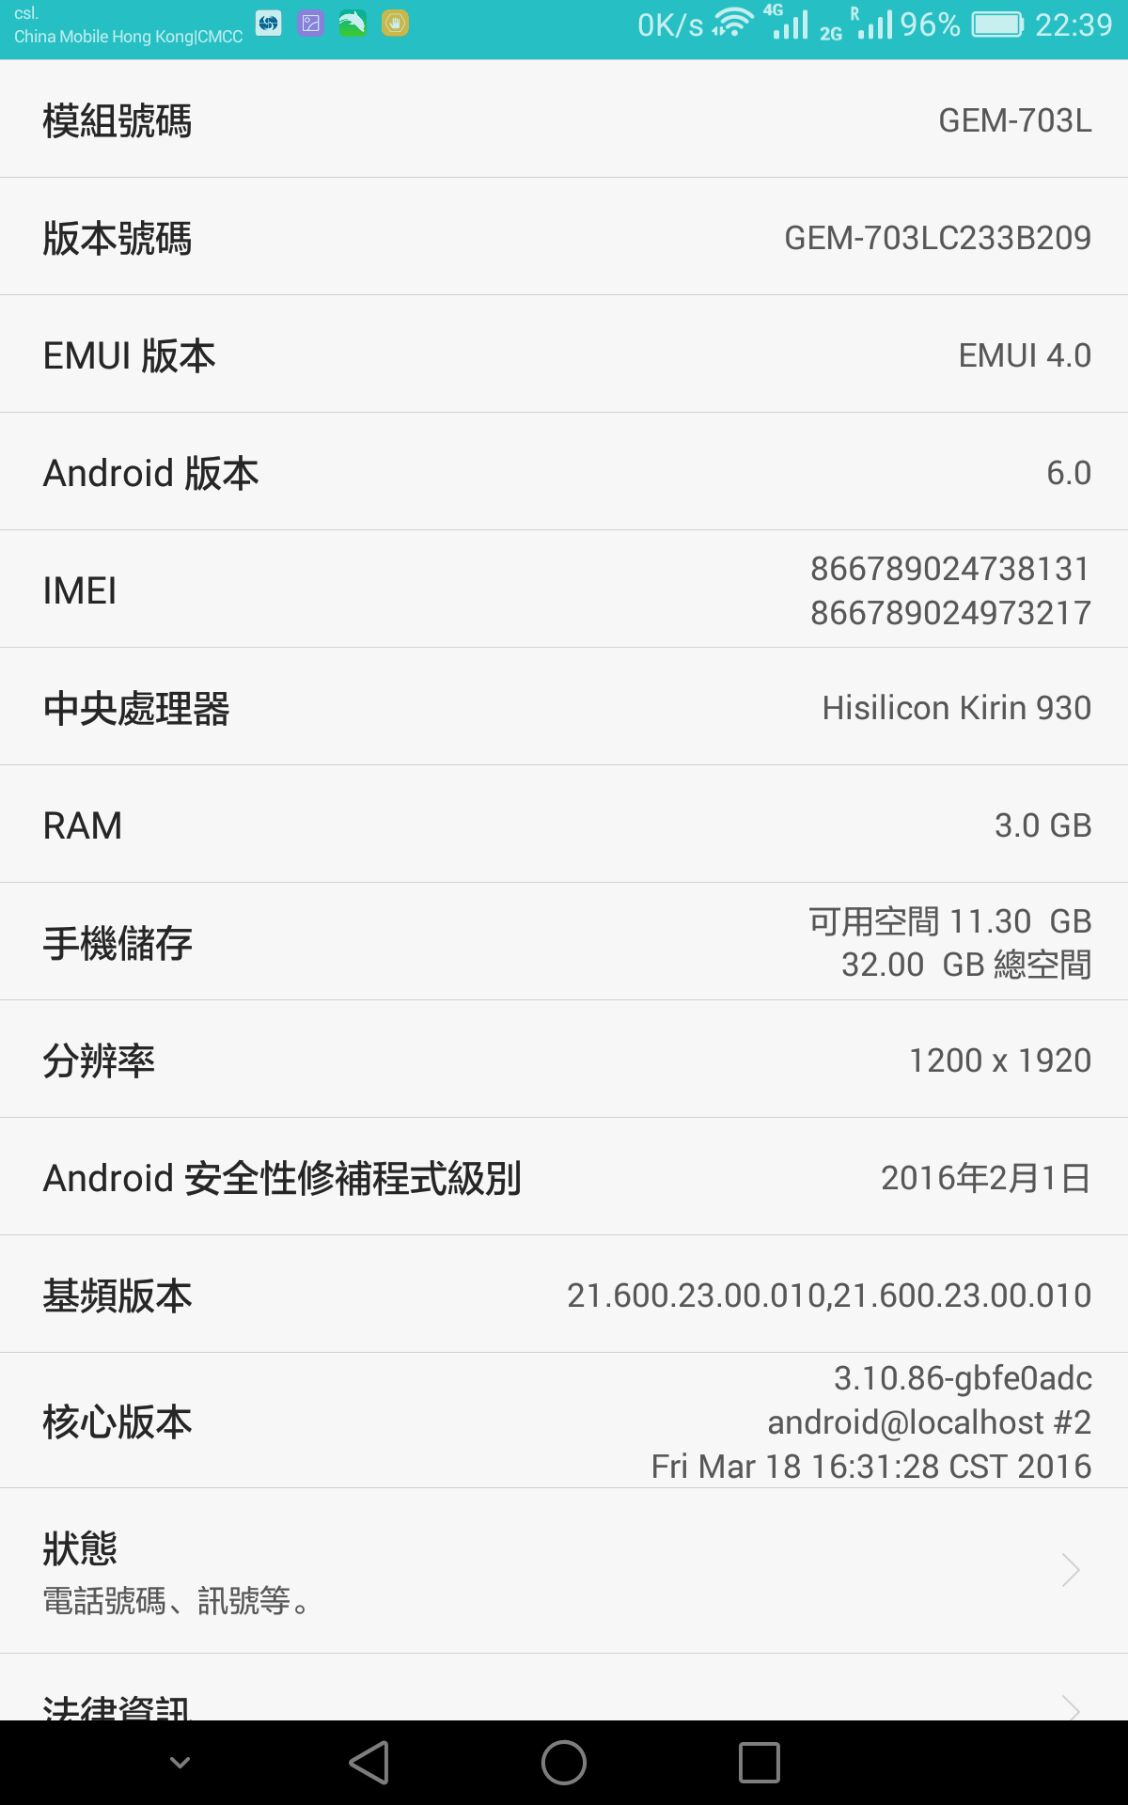 Uploaded_via_HKEPC_IR_Pro_Android(7ab97).jpg